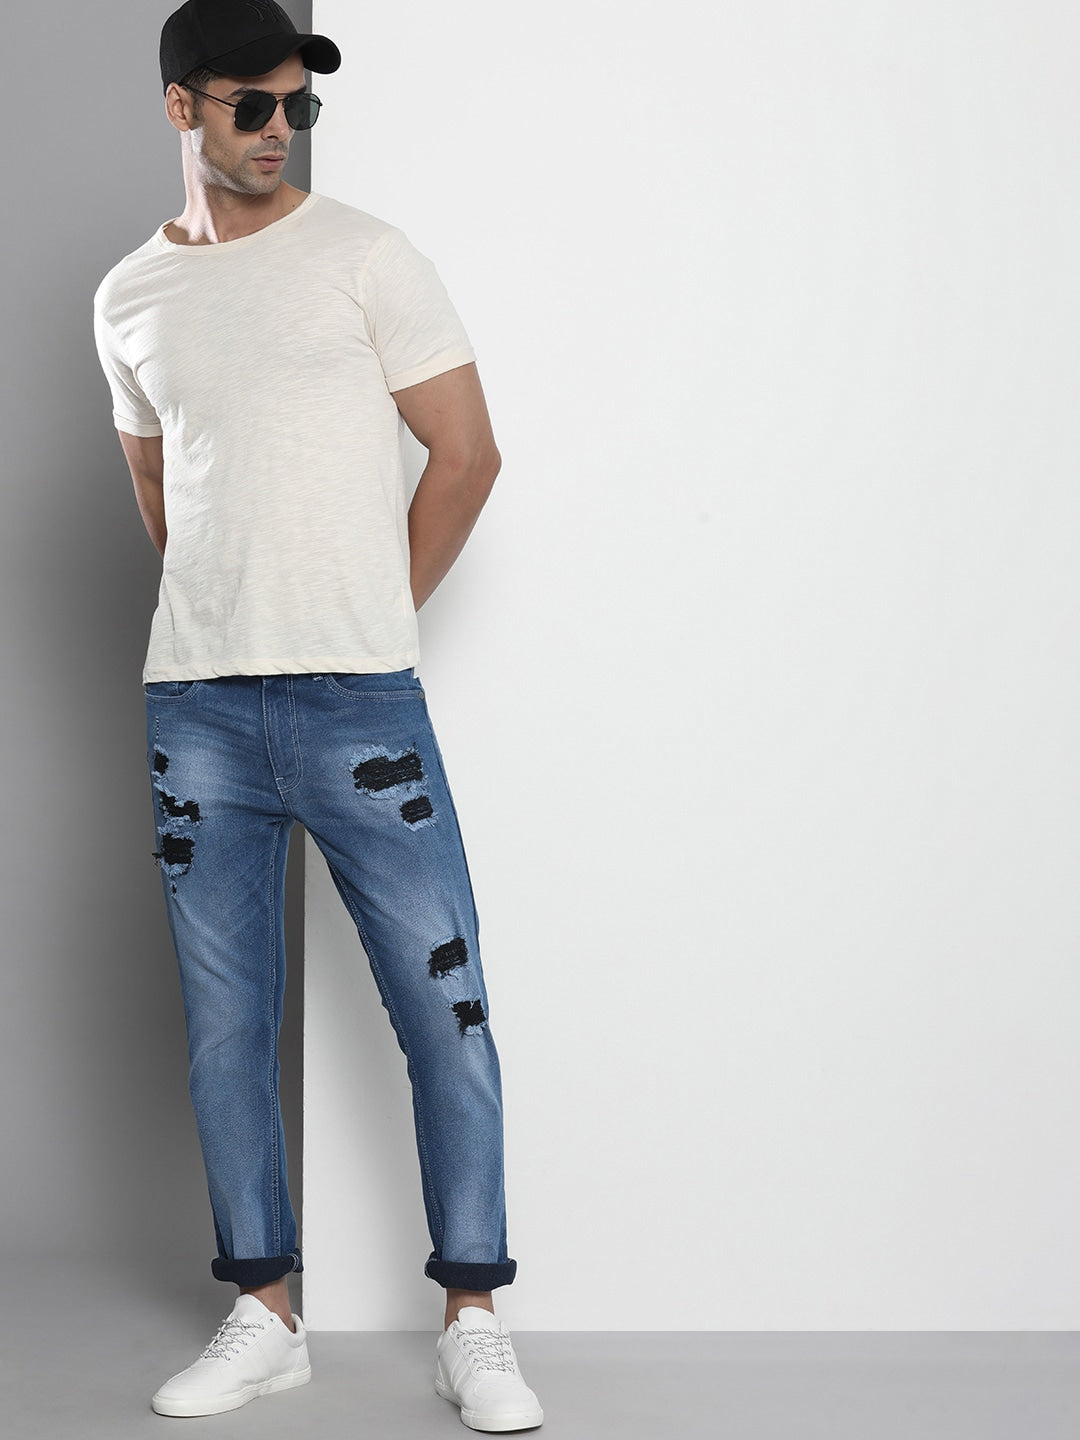 Shop Men Slim Straight Fit Jeans Online.